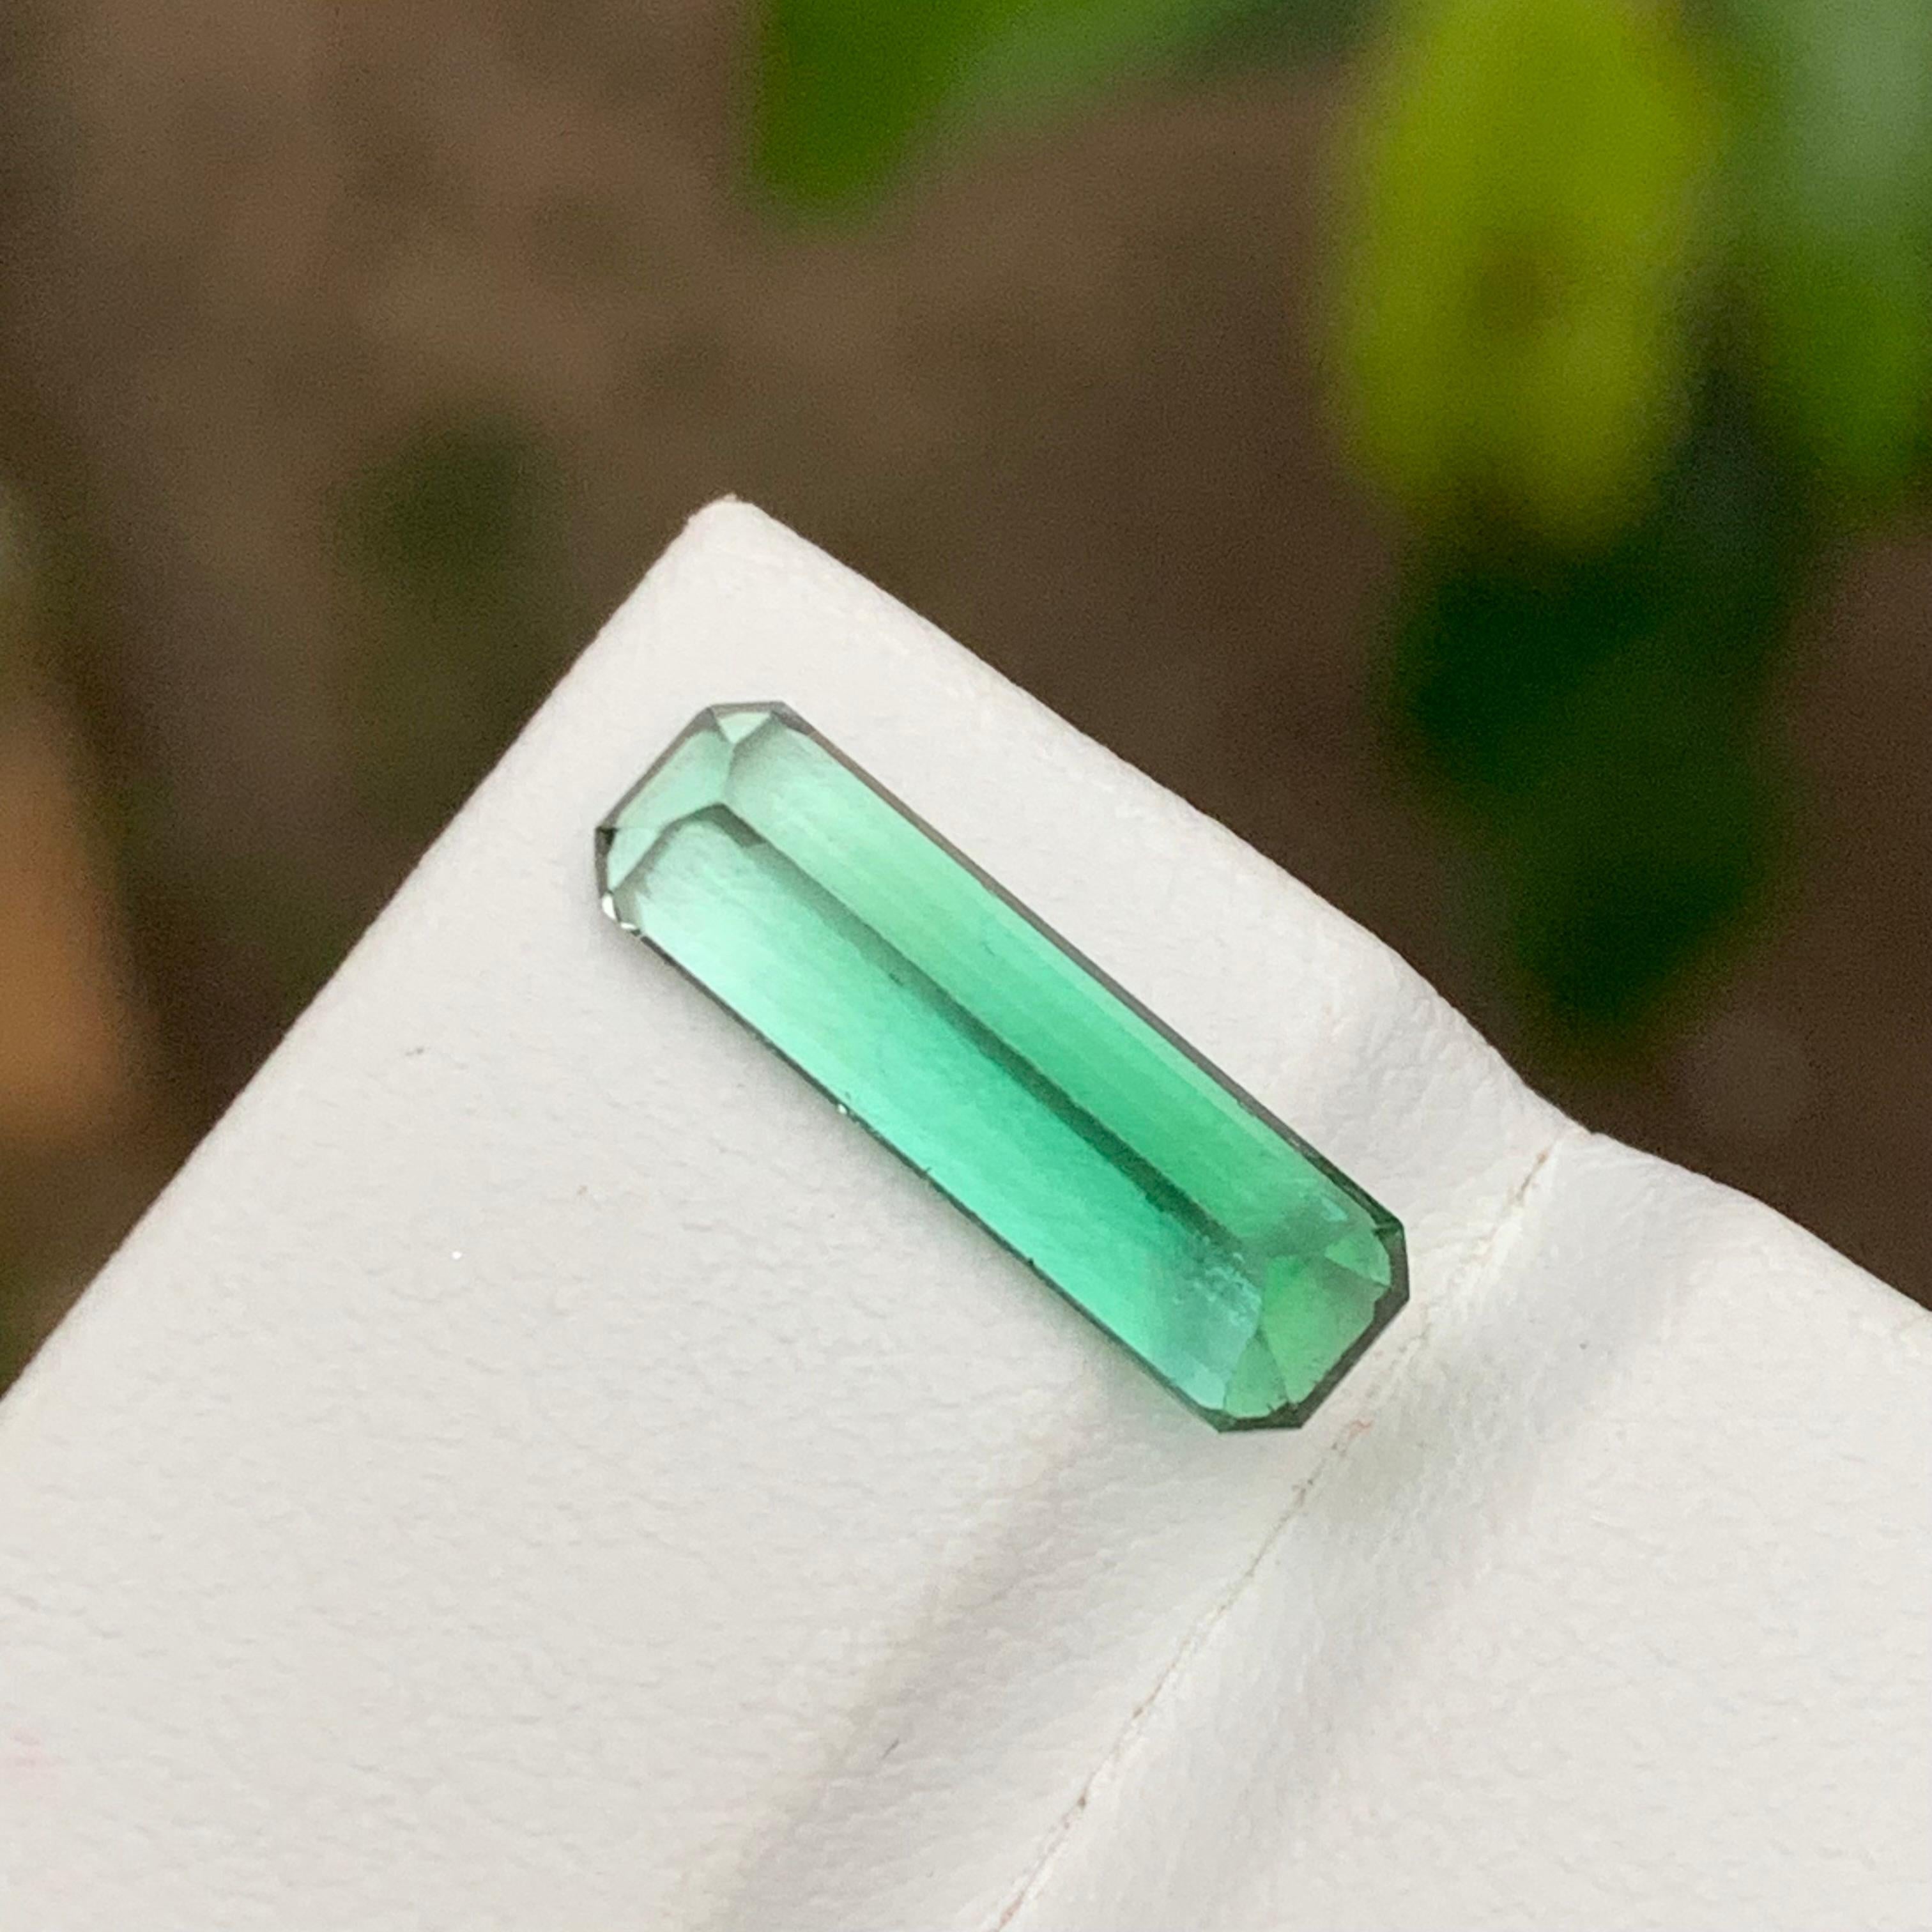 Rare Vivid Bluish Green Bicolor Tourmaline Gemstone 2.85 Ct Emerald Cut for Ring For Sale 3